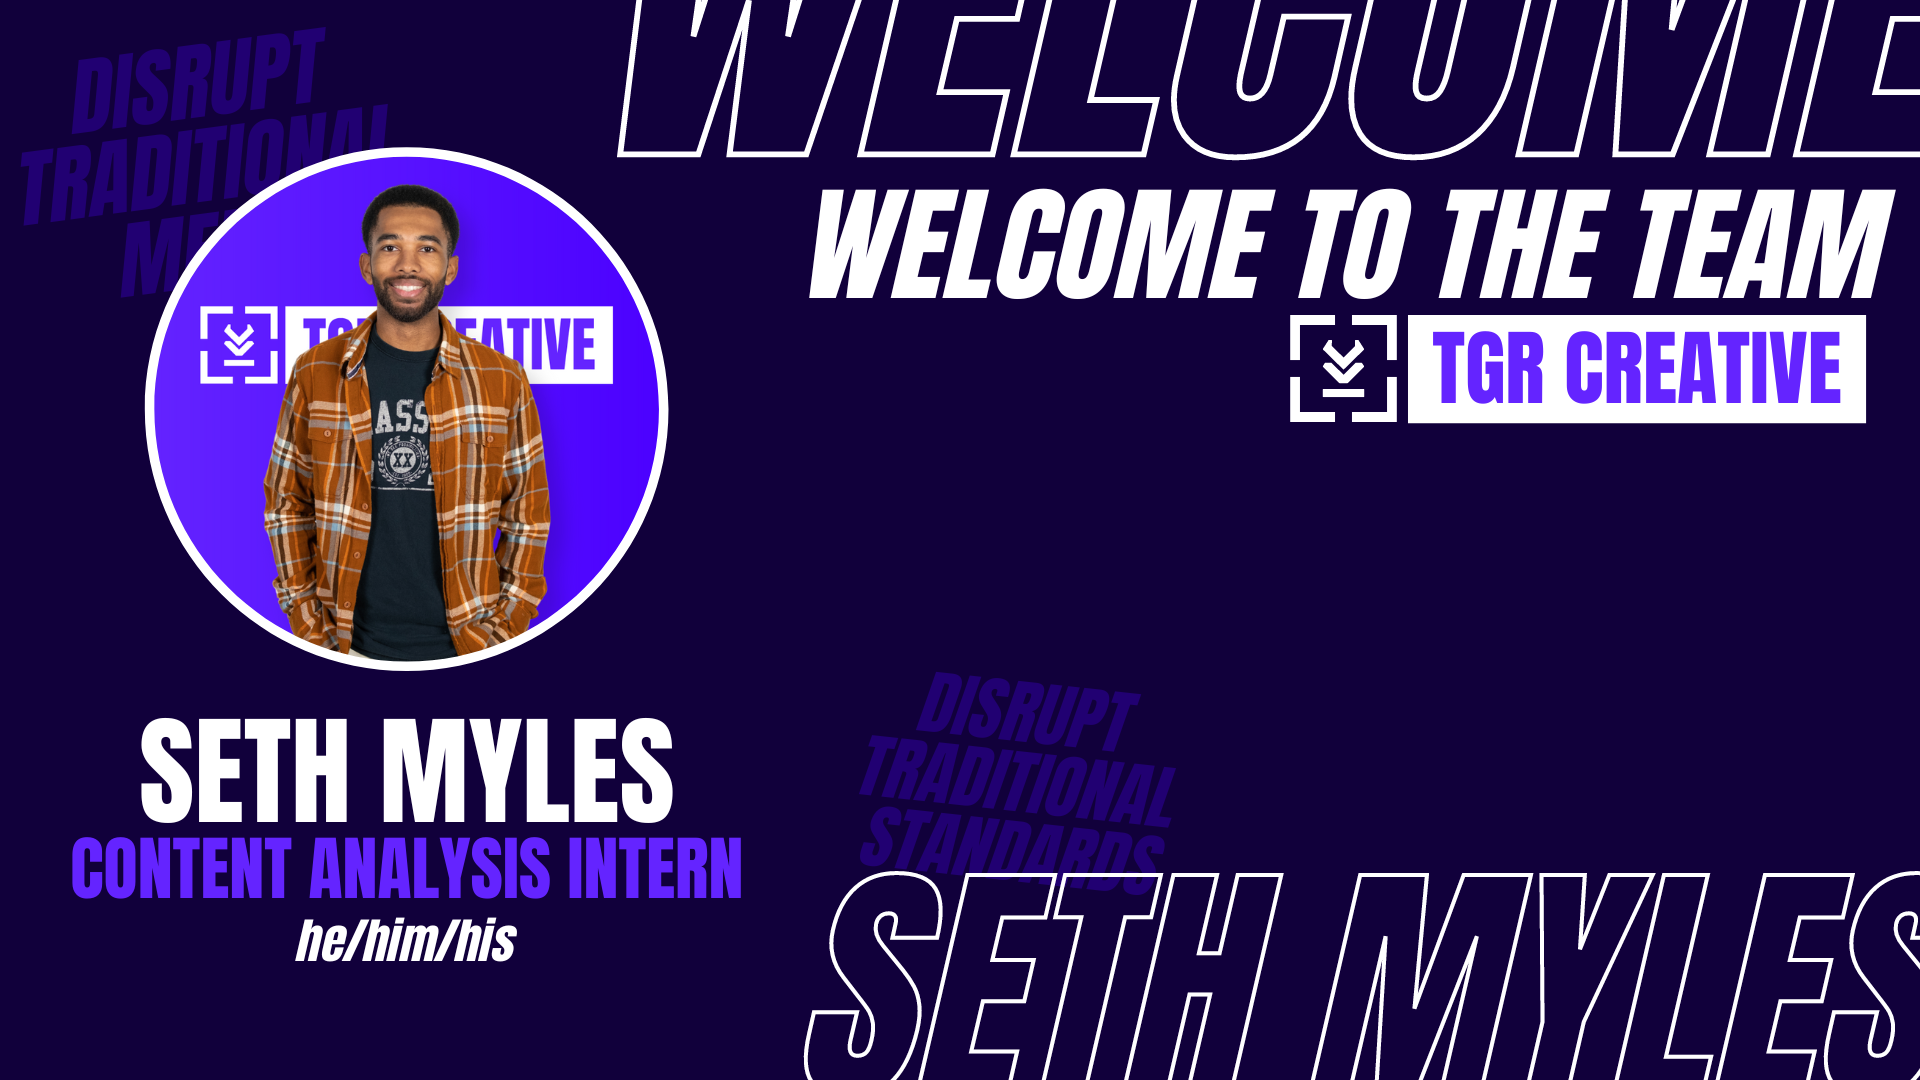 TGR Creative Welcomes Seth Myles as Content Analysis Intern